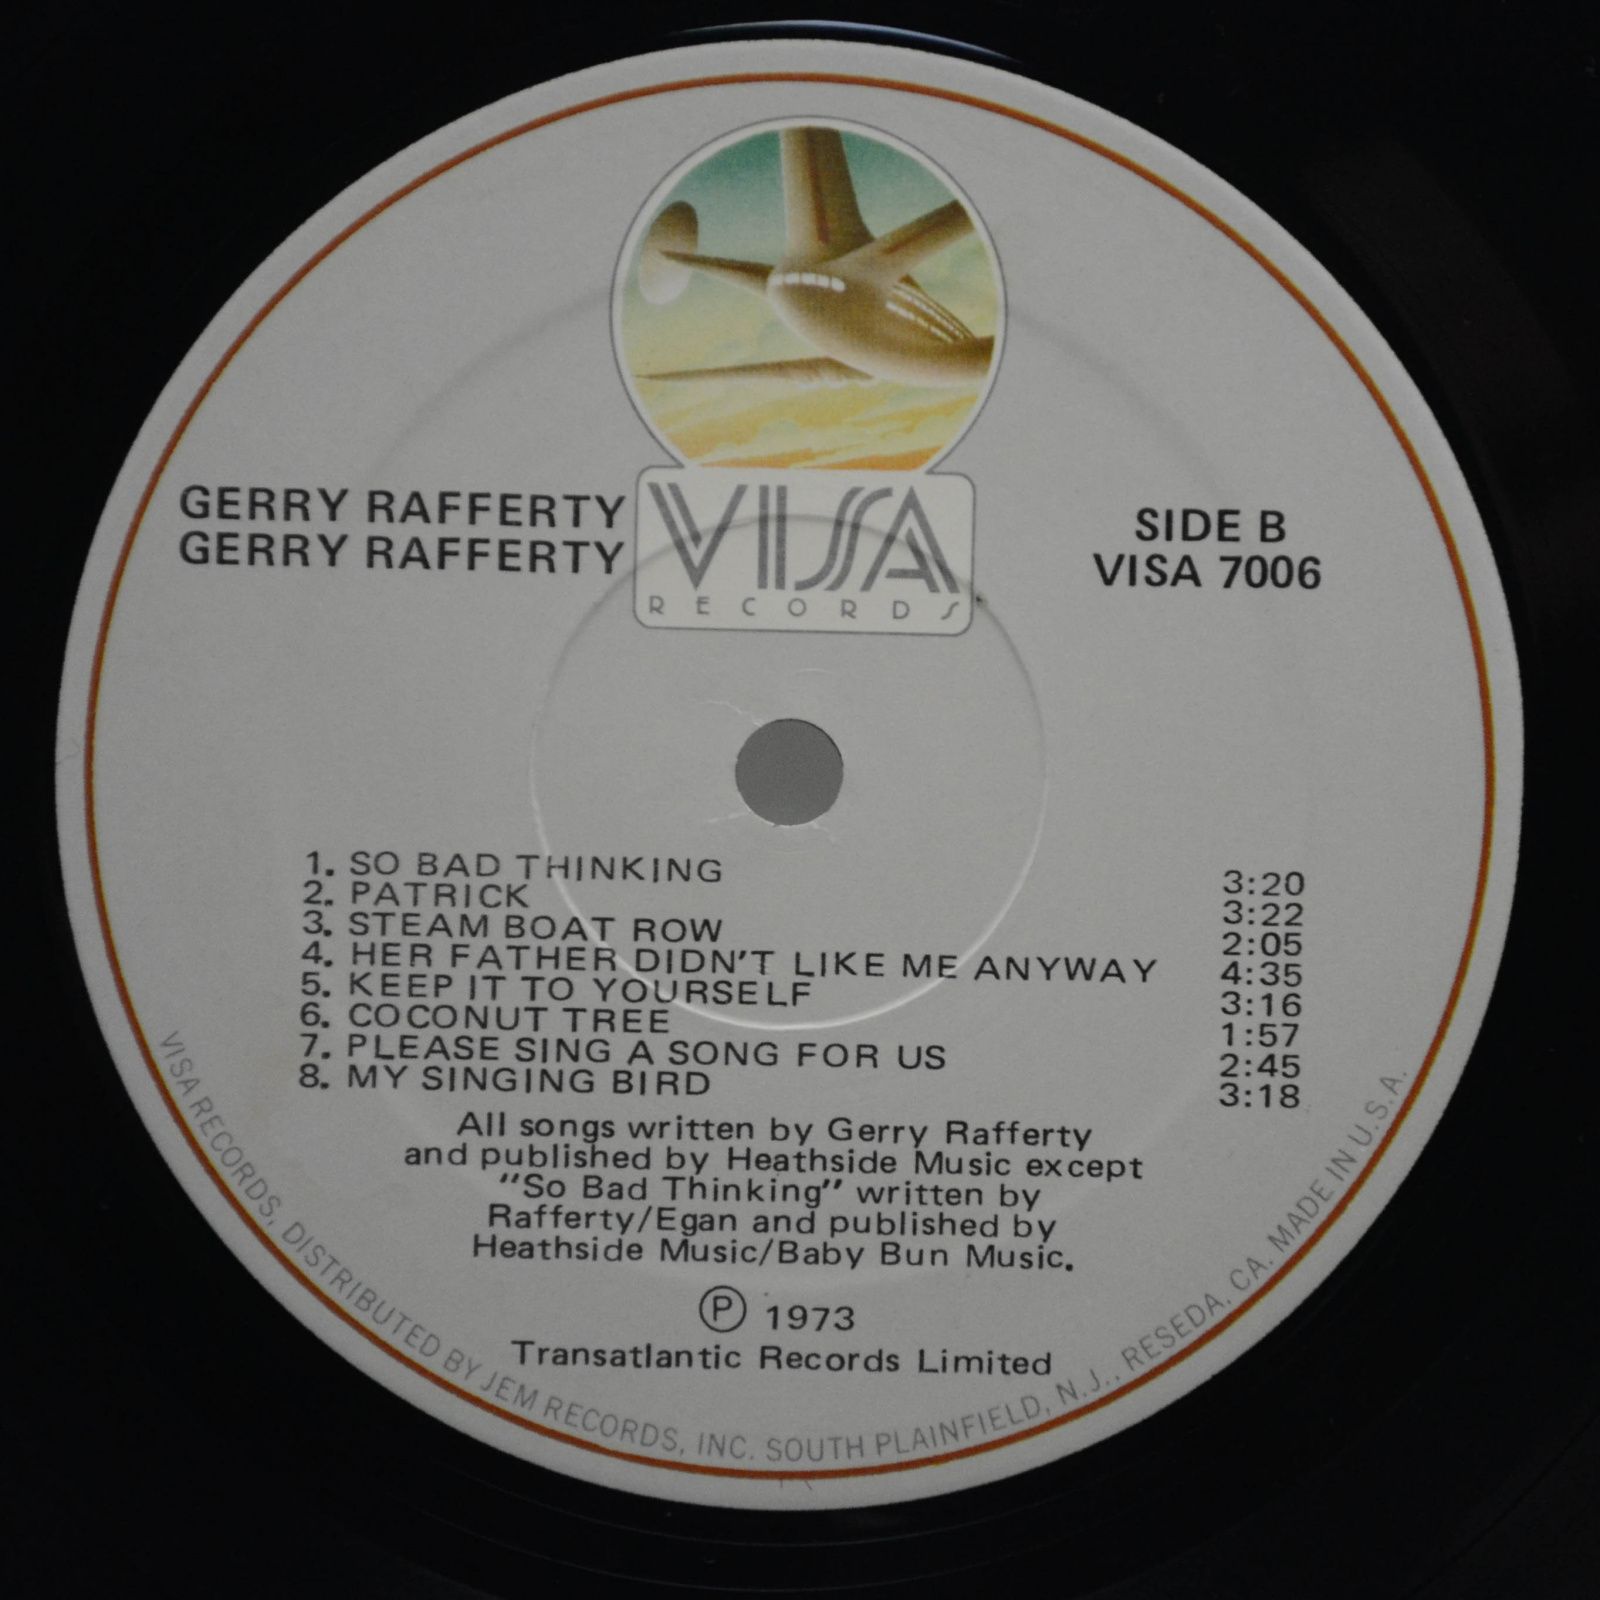 Gerry Rafferty — Gerry Rafferty (USA), 1974